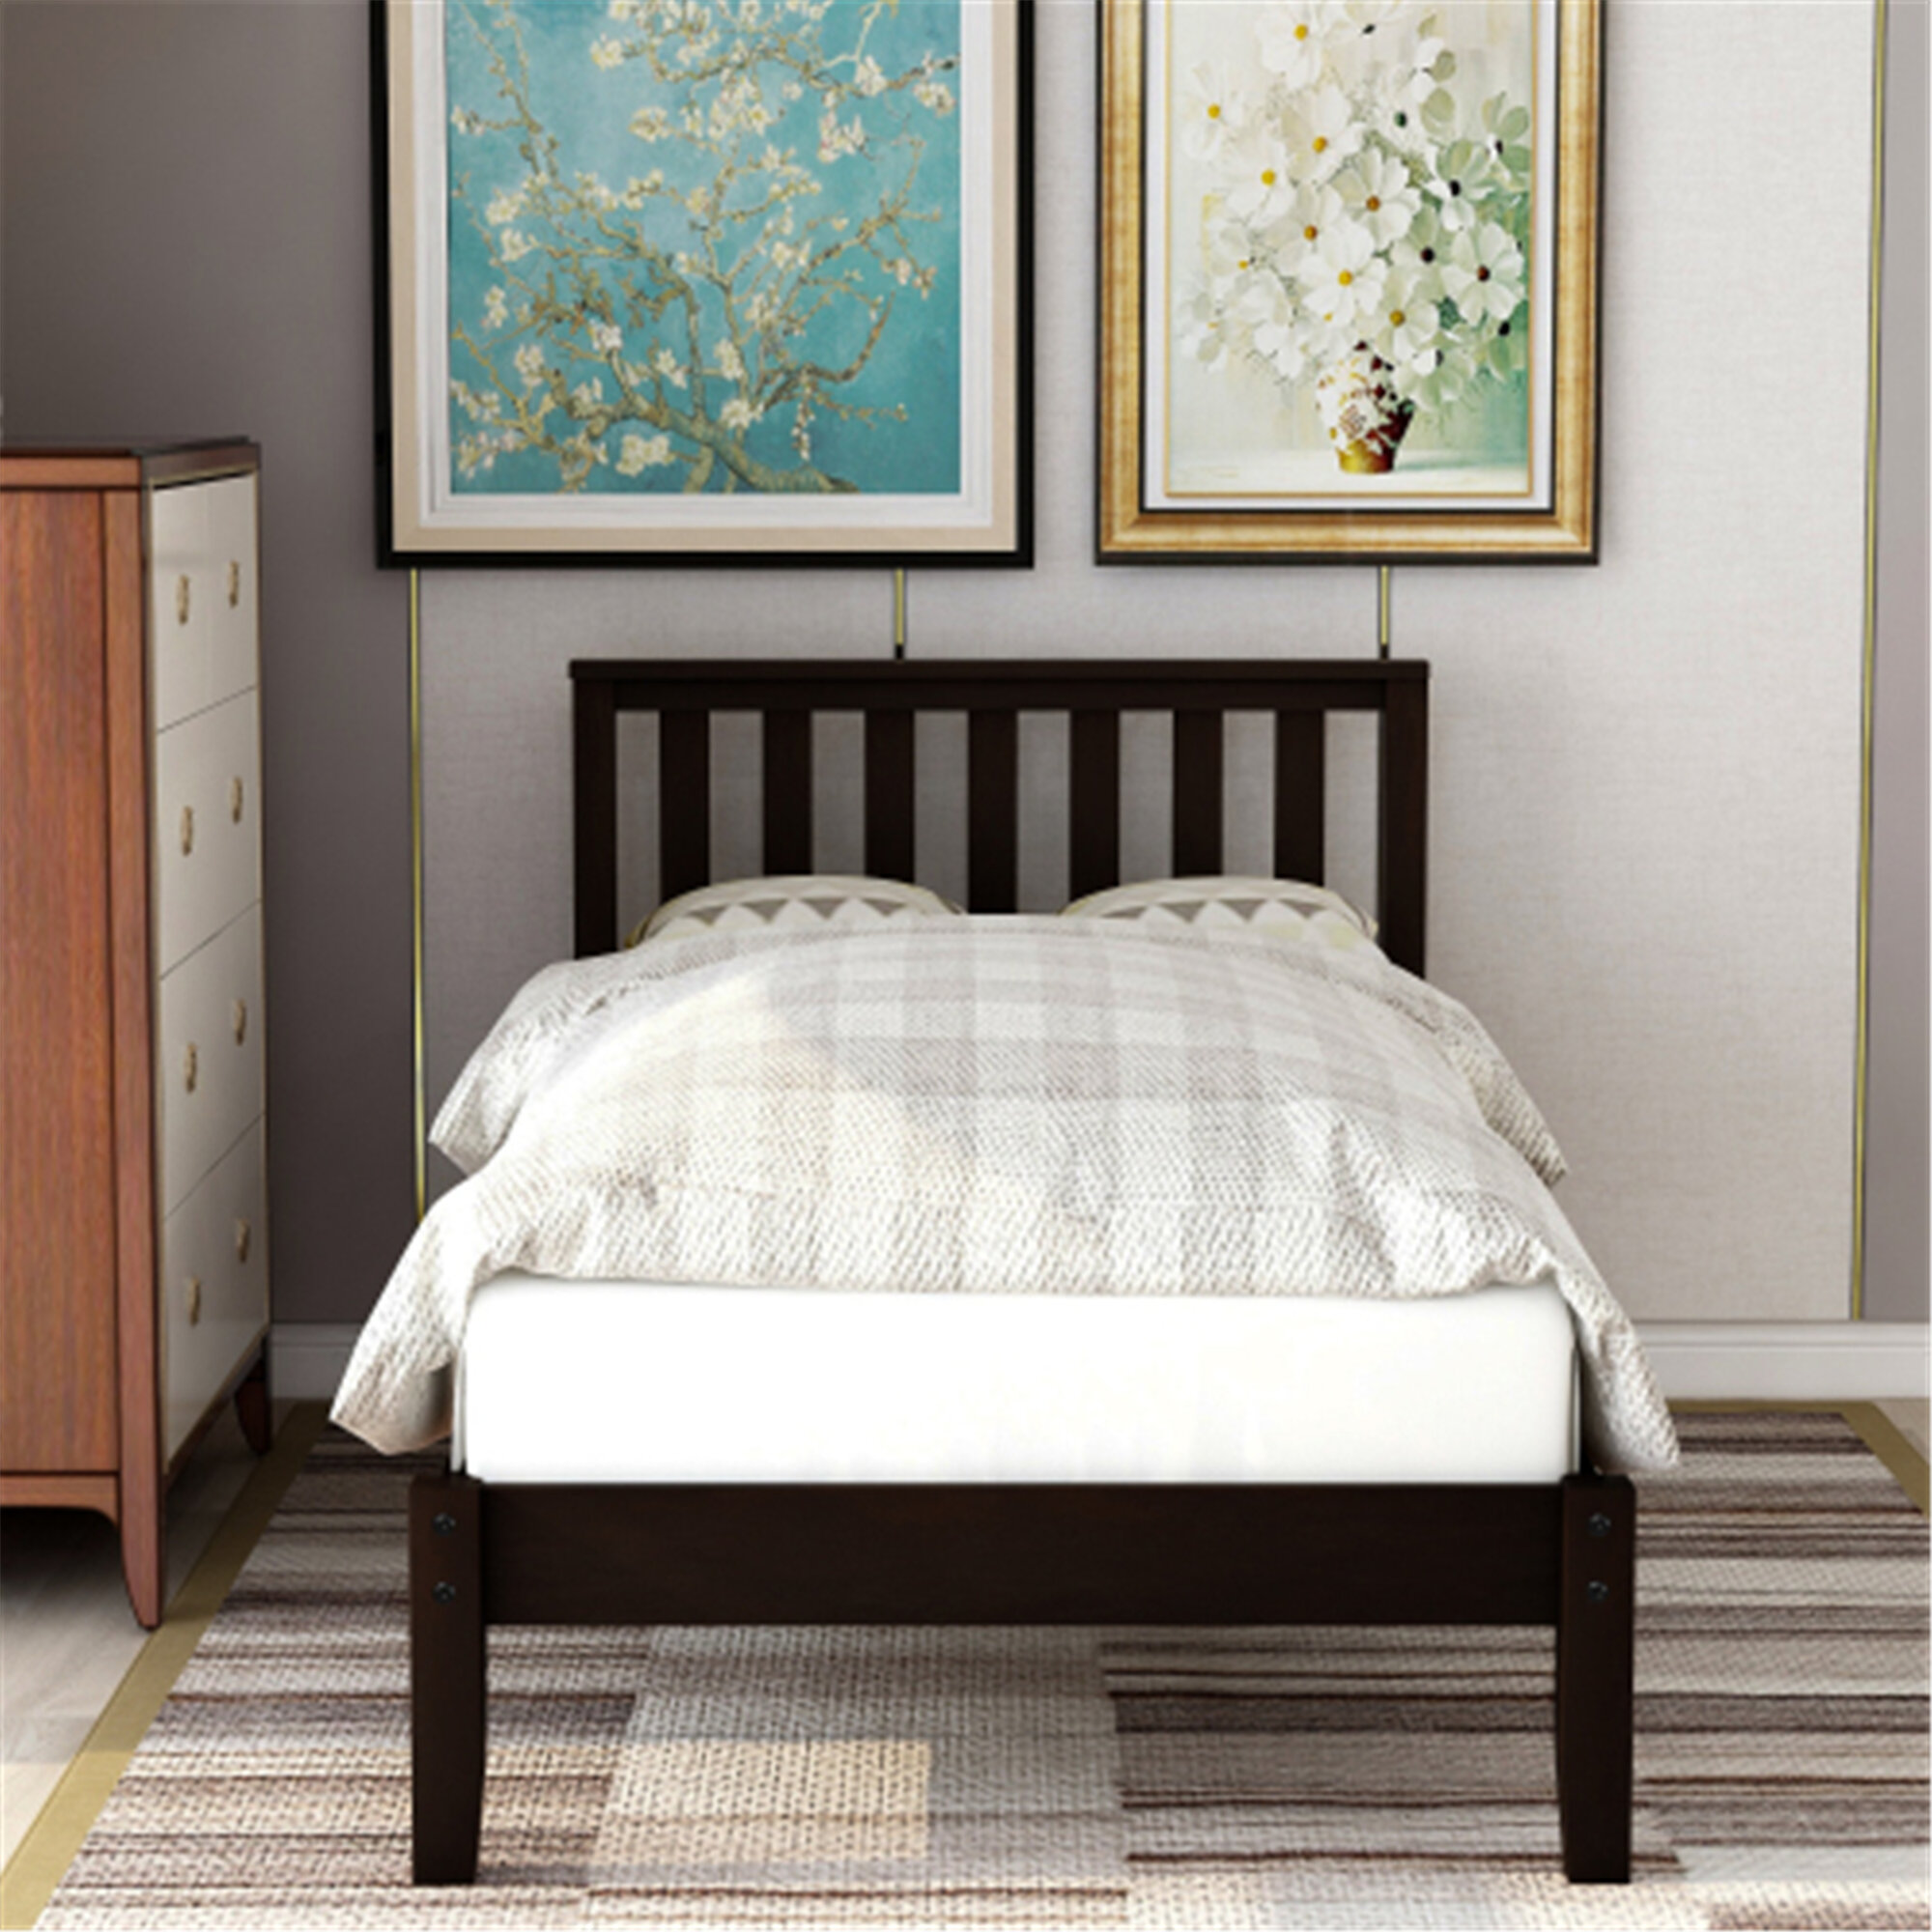 Details about  / Platform Bed With Drawers Wooden Slats Wood Bed Frame Home Furniture